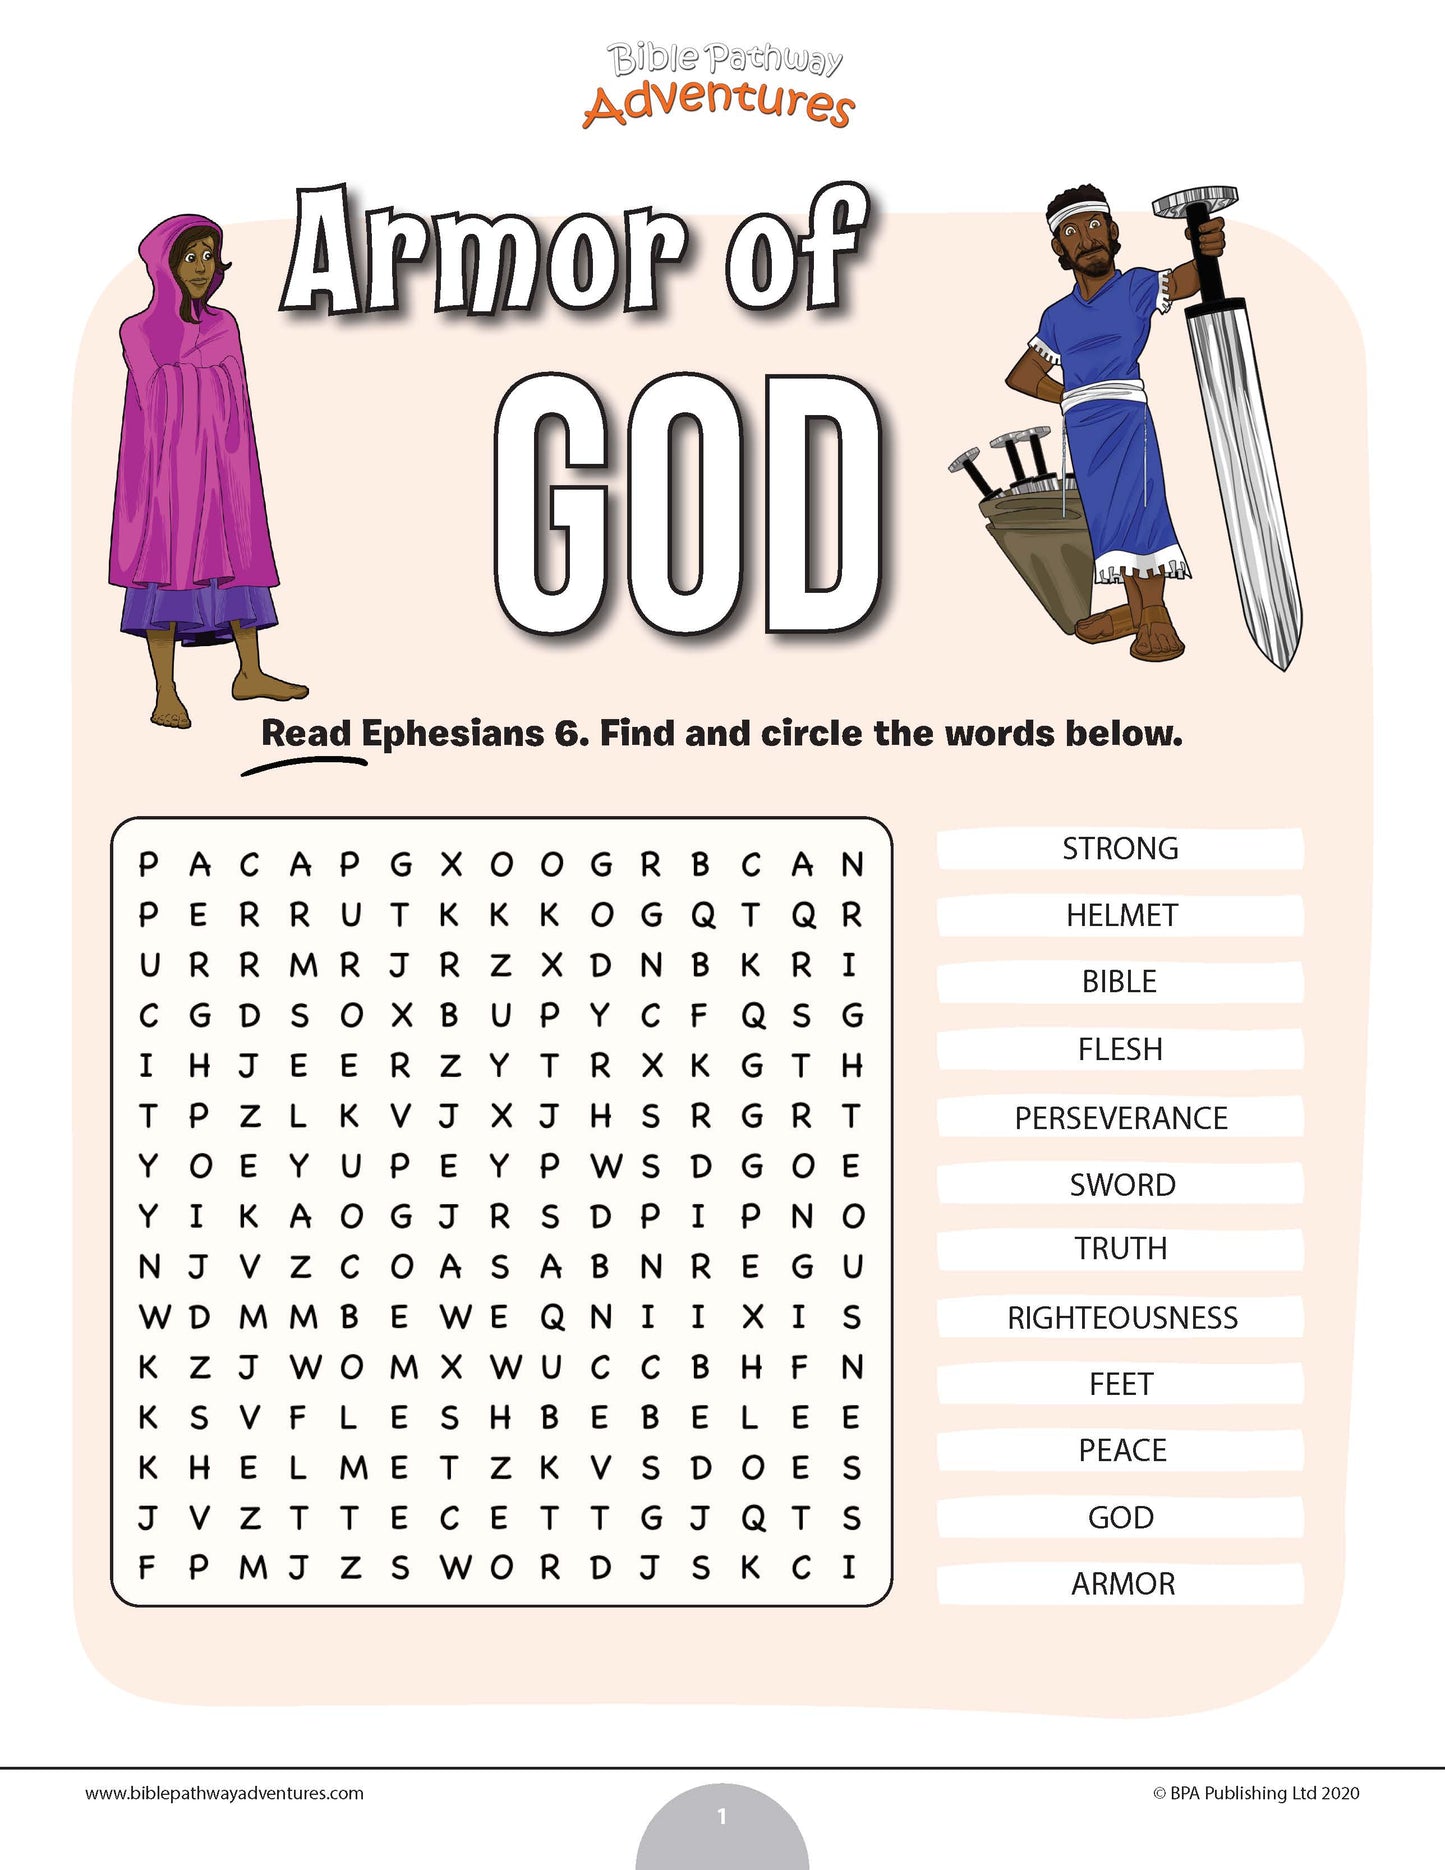 Armor of God word search (PDF)